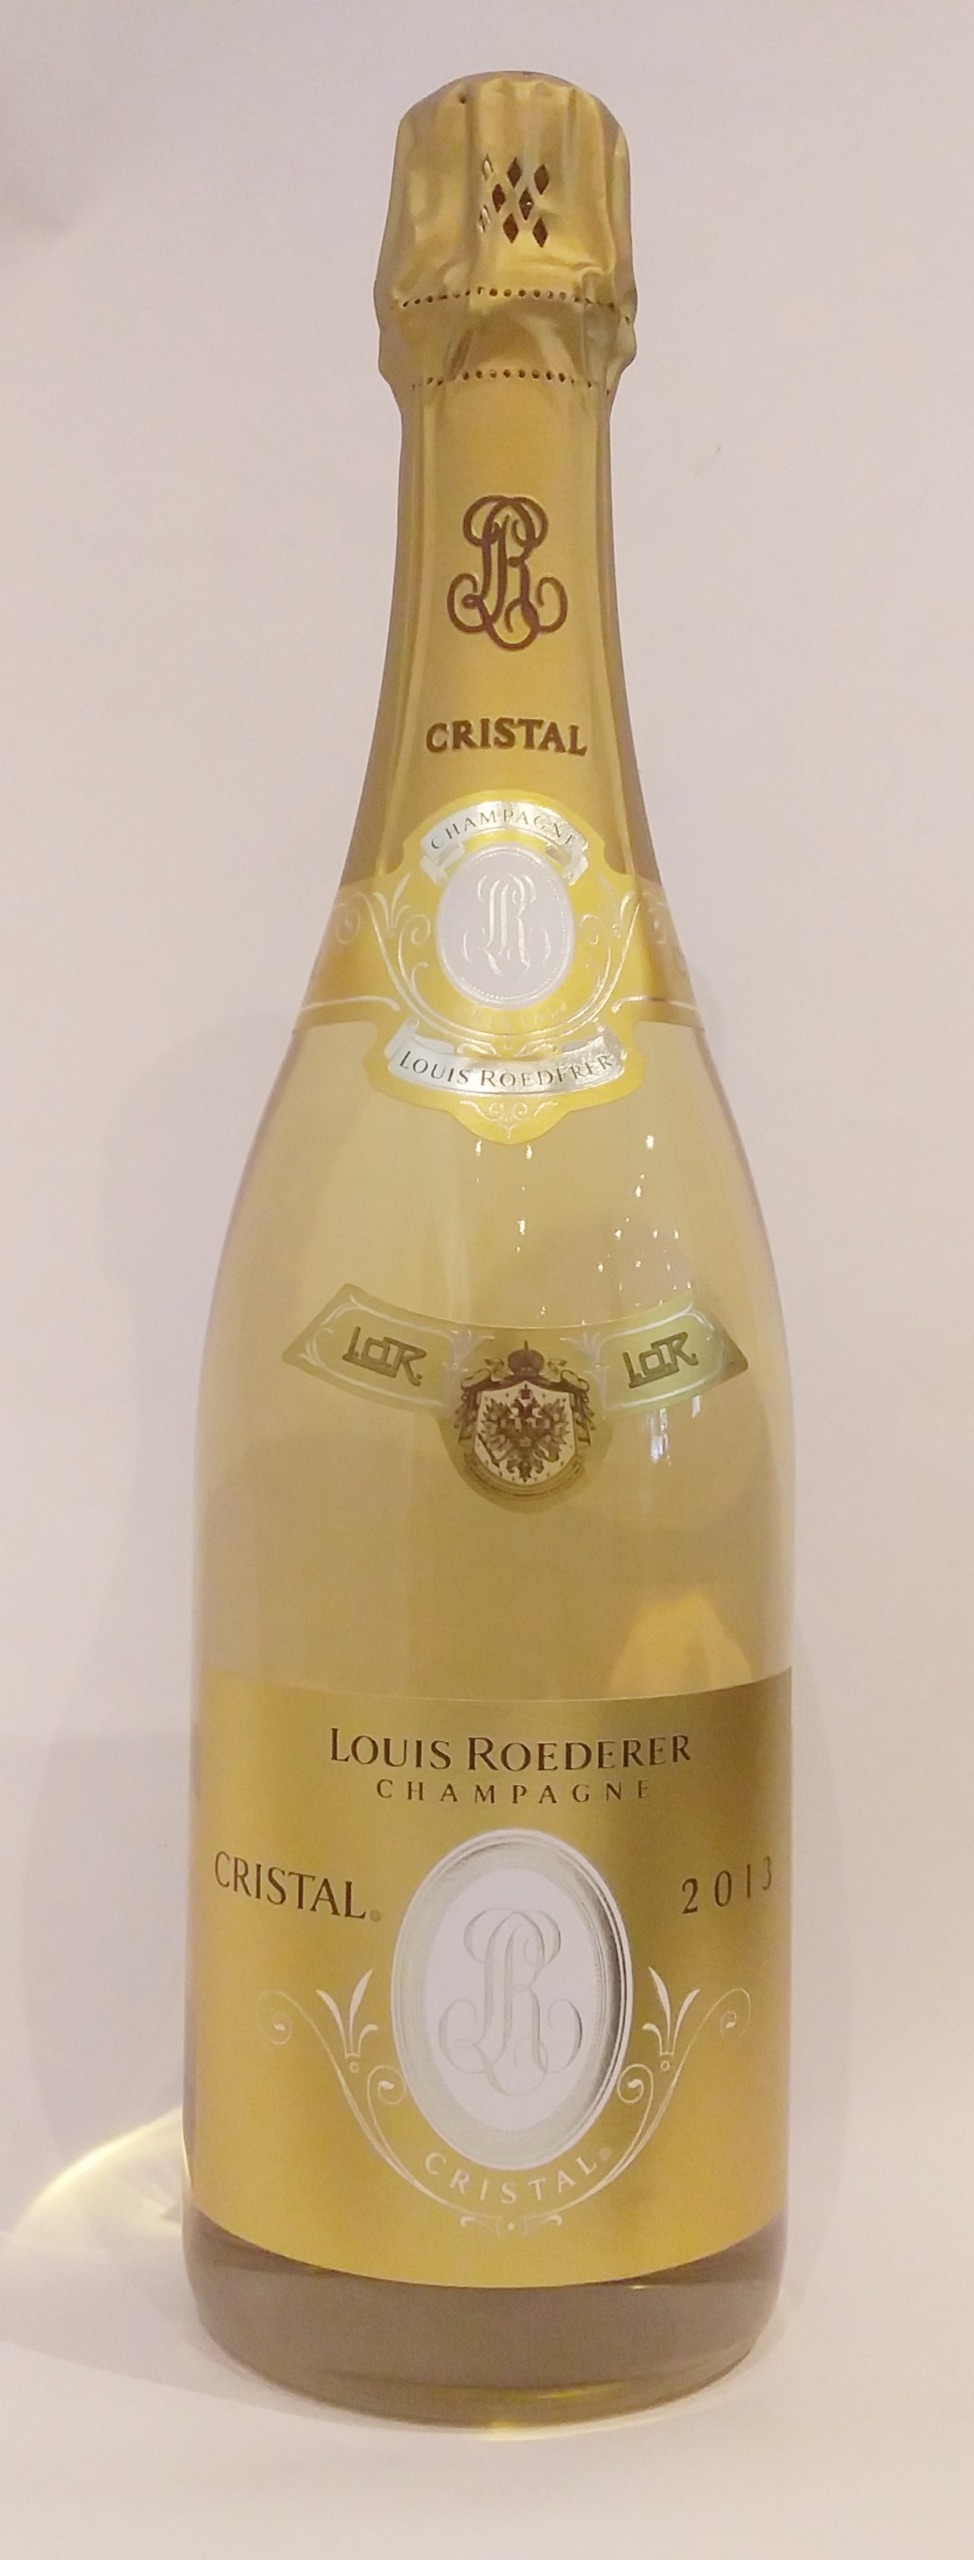 Champagne brut - Domaine Louis Roederer - Cuvée Cristal - 2013